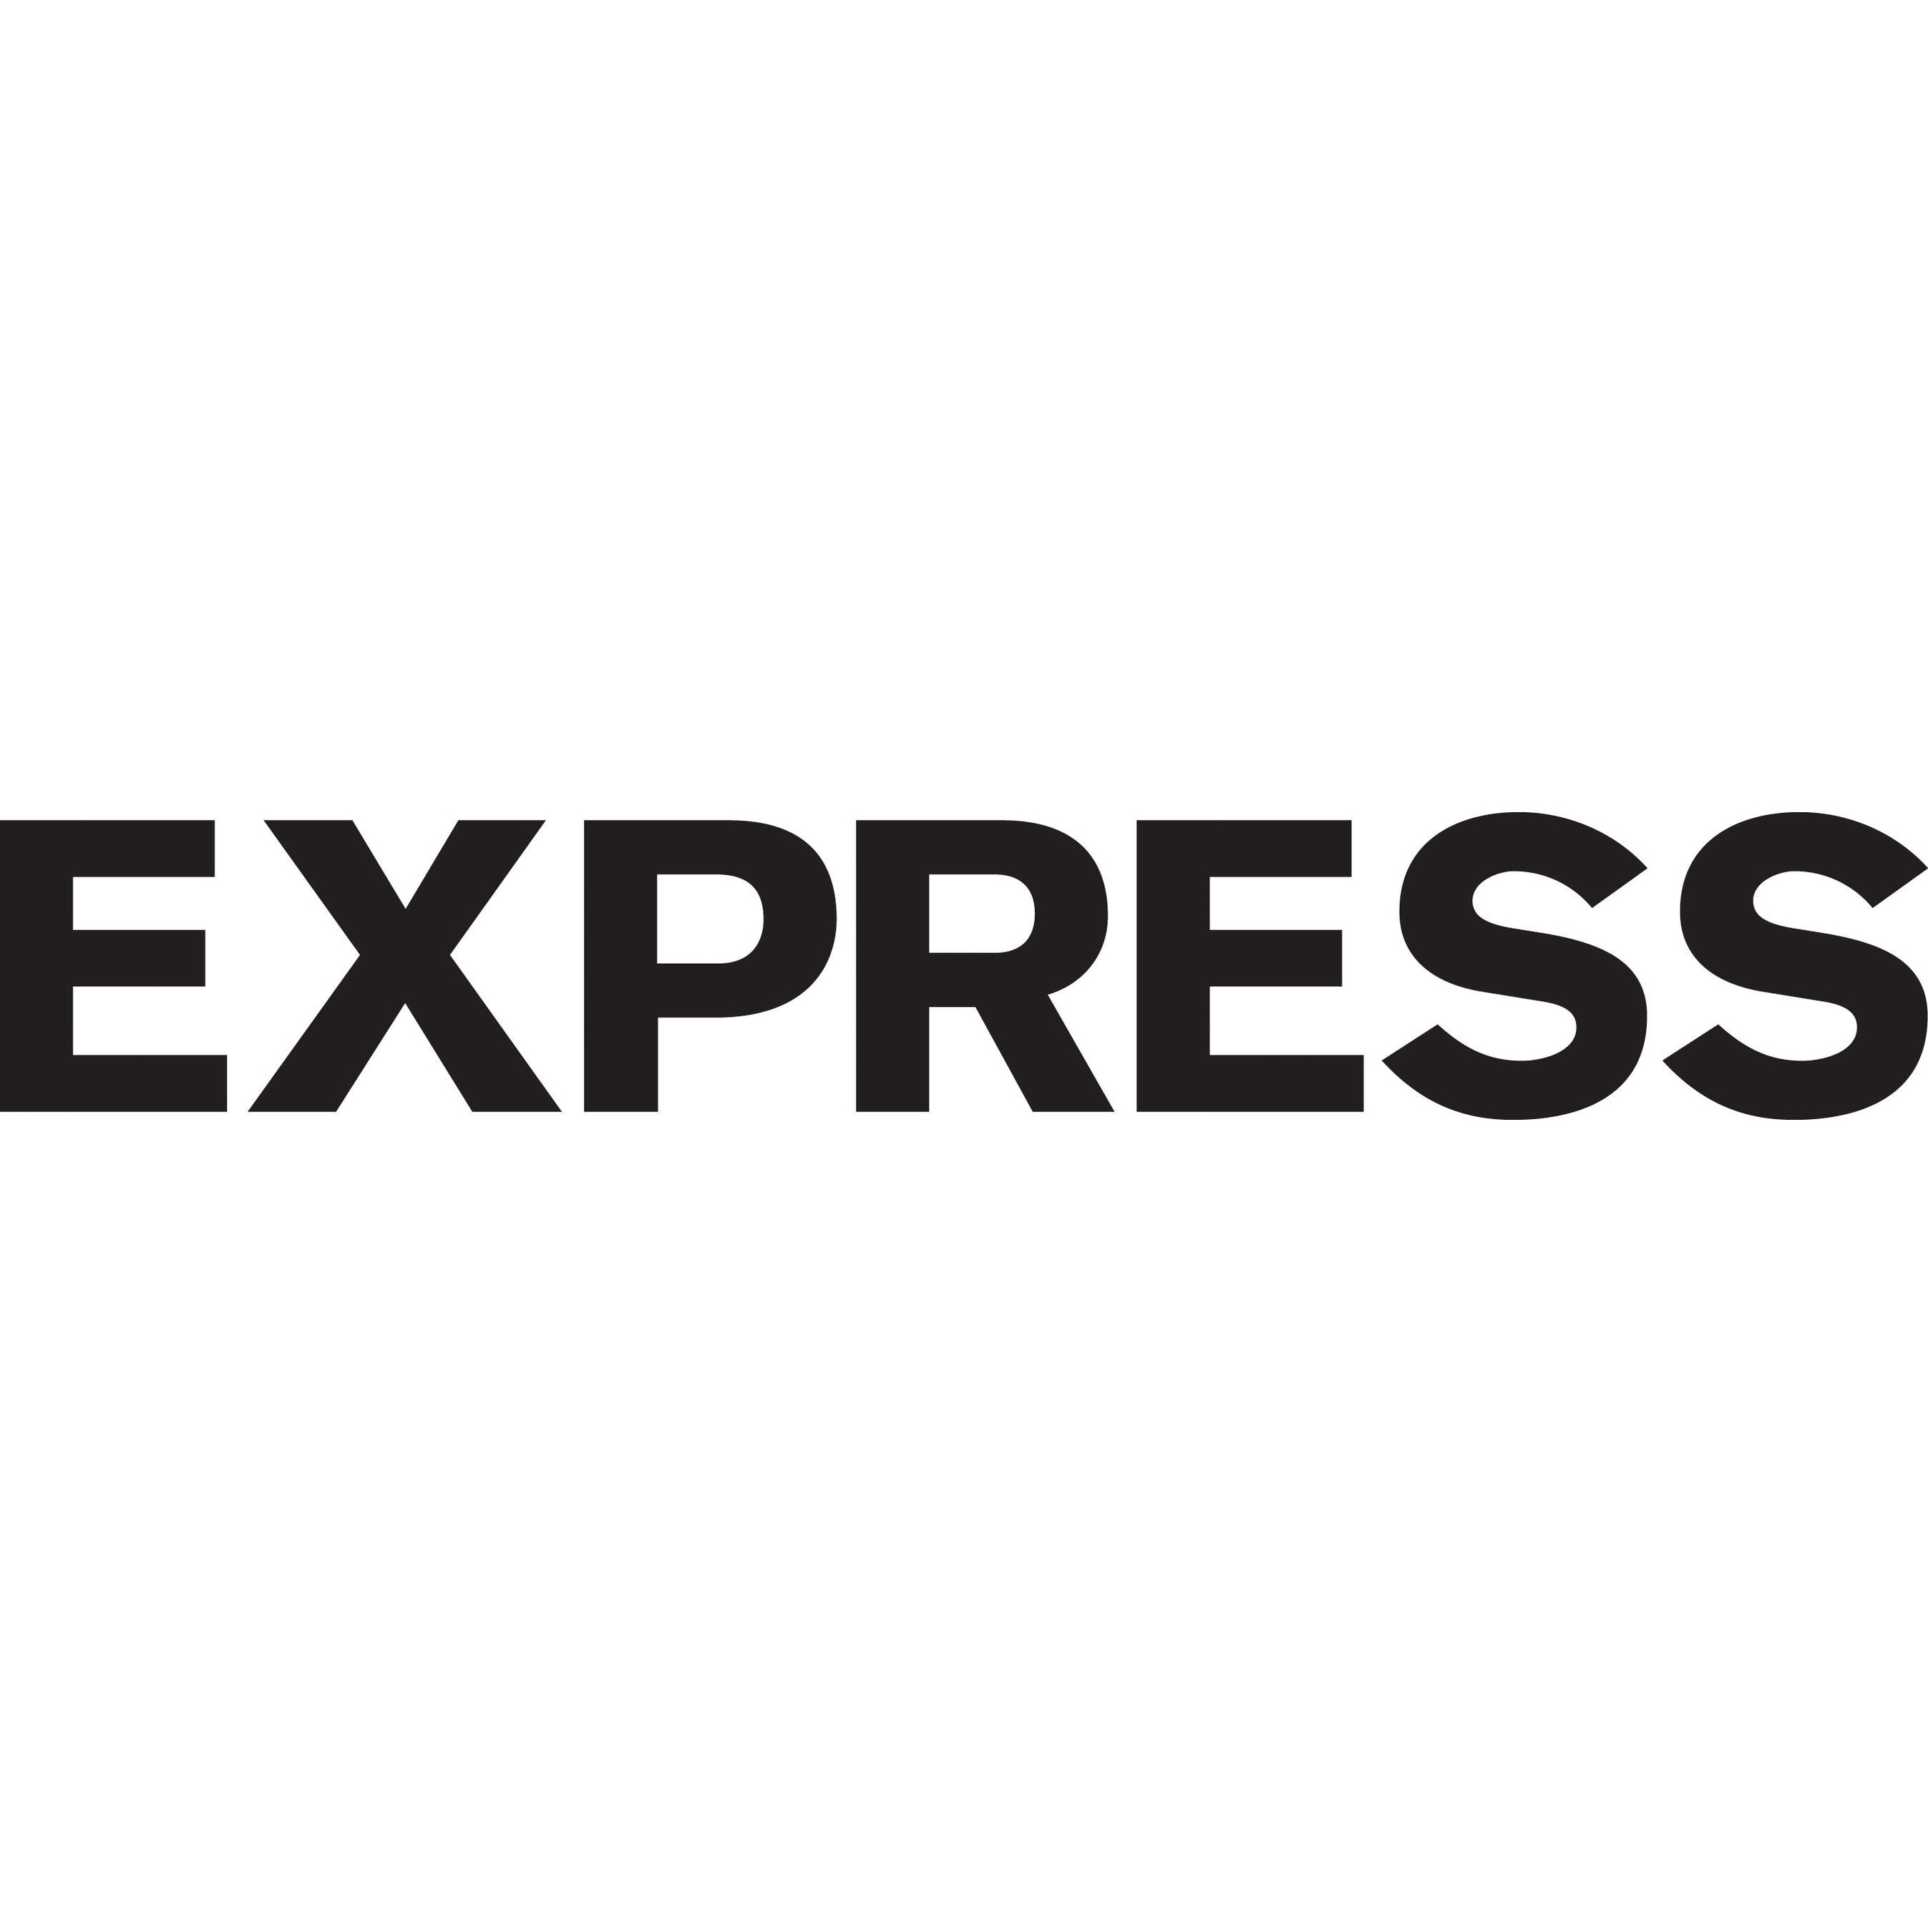 Express. Express лого. Express мессенджер. Express js logo PNG.